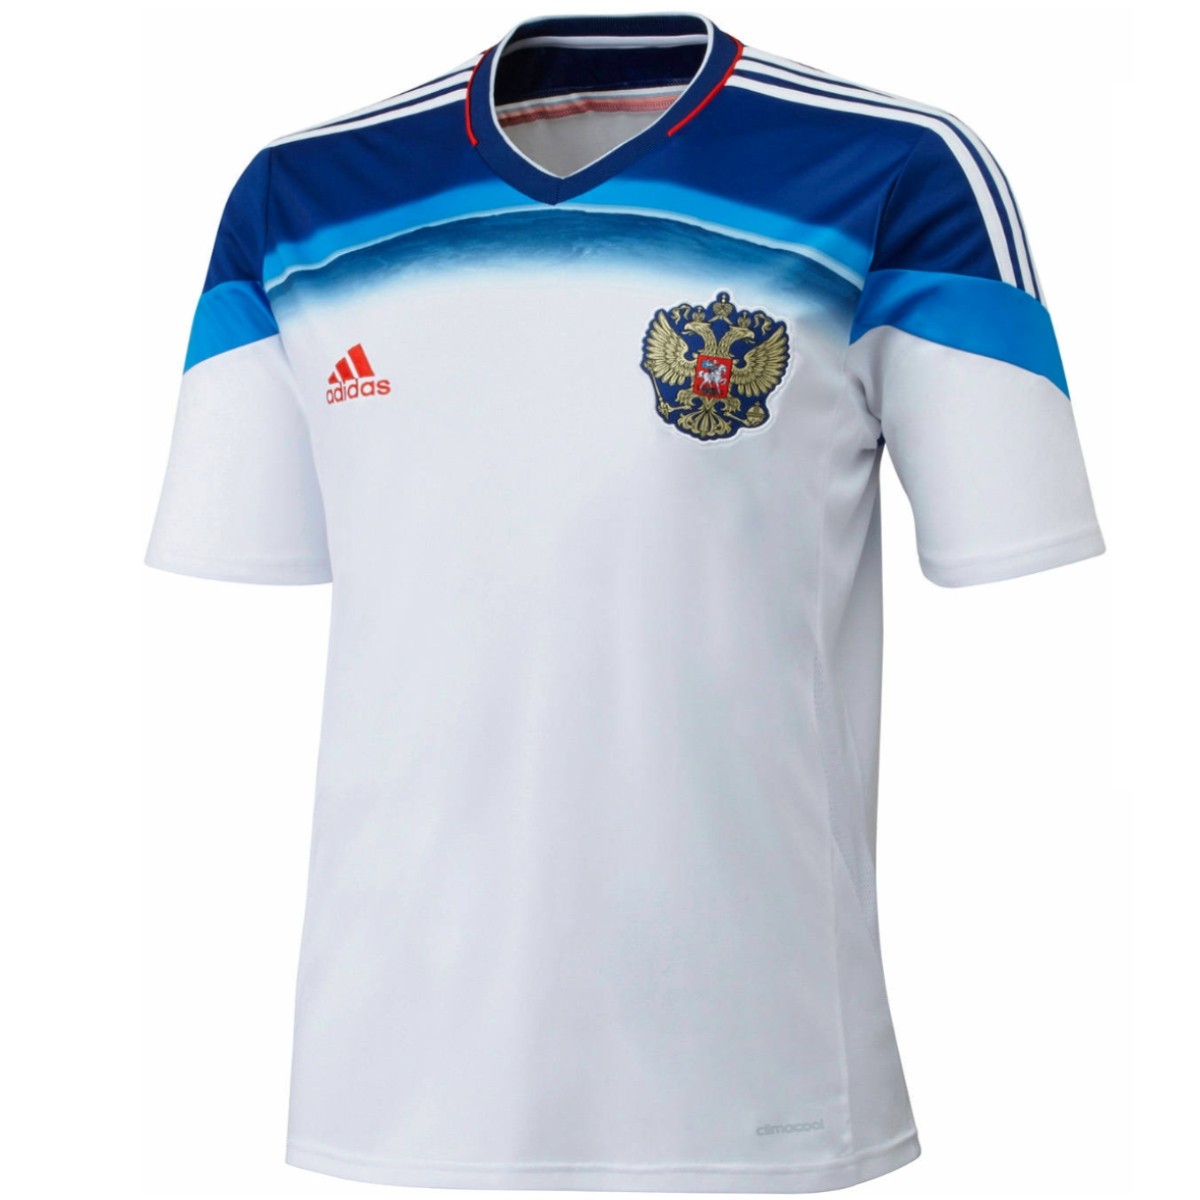 russia football jersey